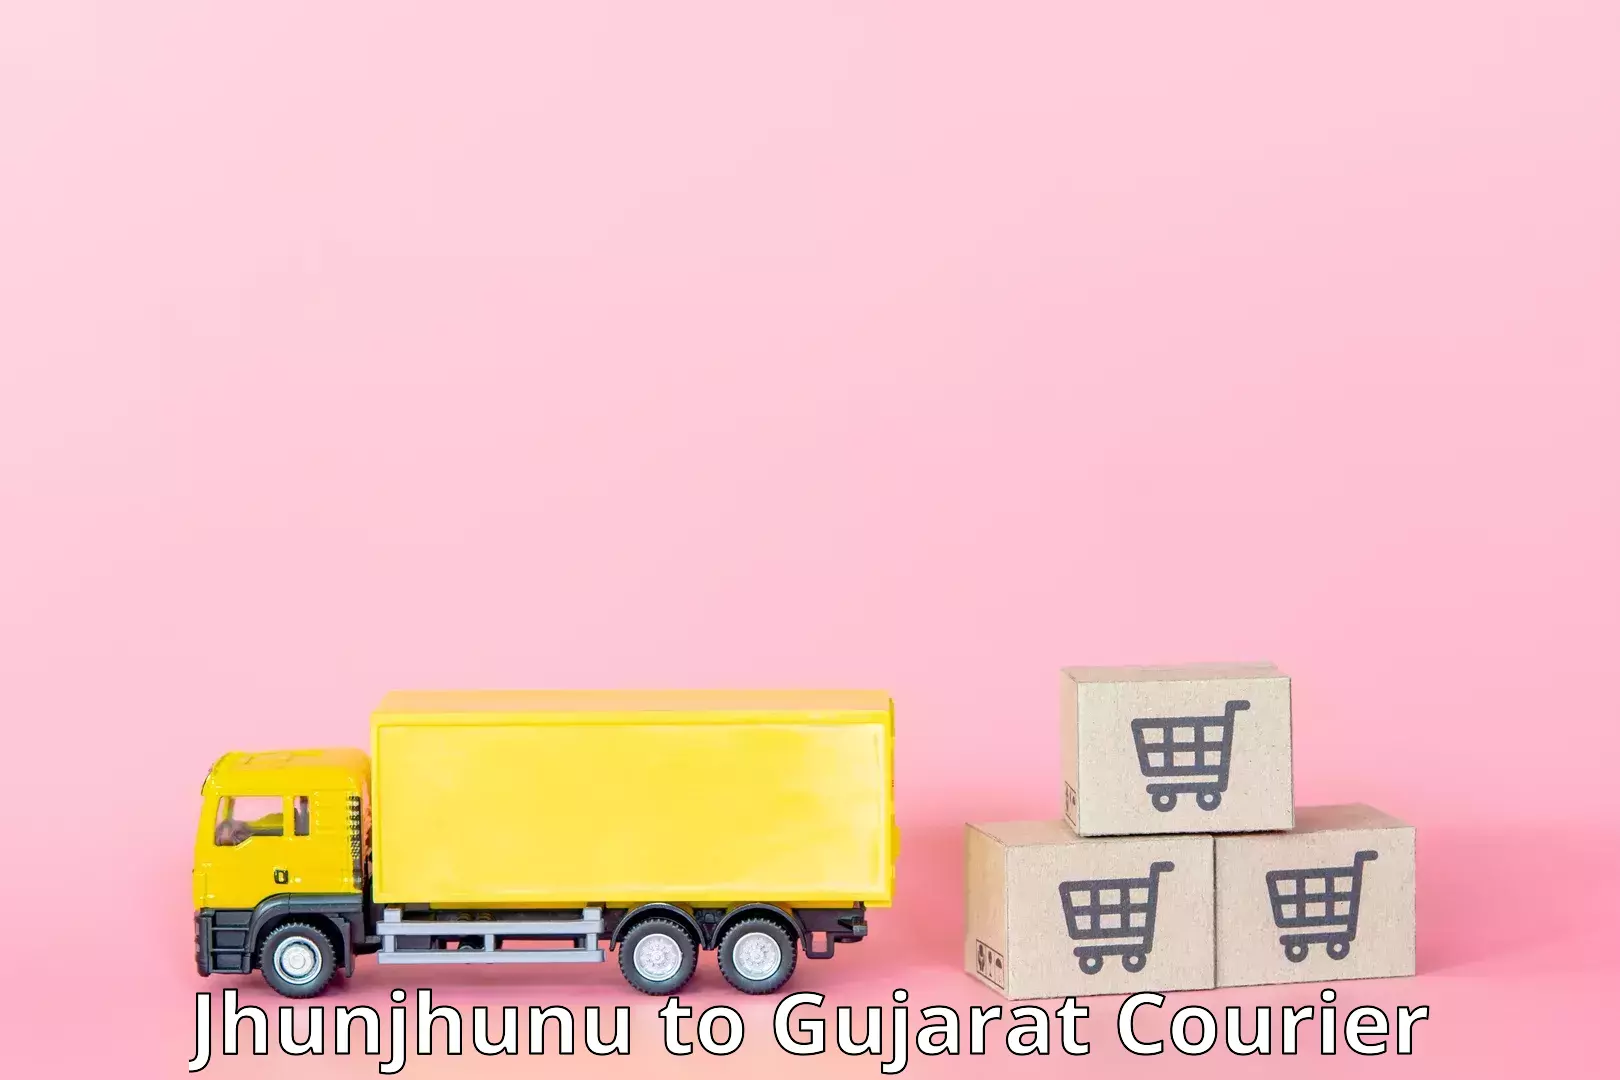 Efficient courier operations Jhunjhunu to Gujarat